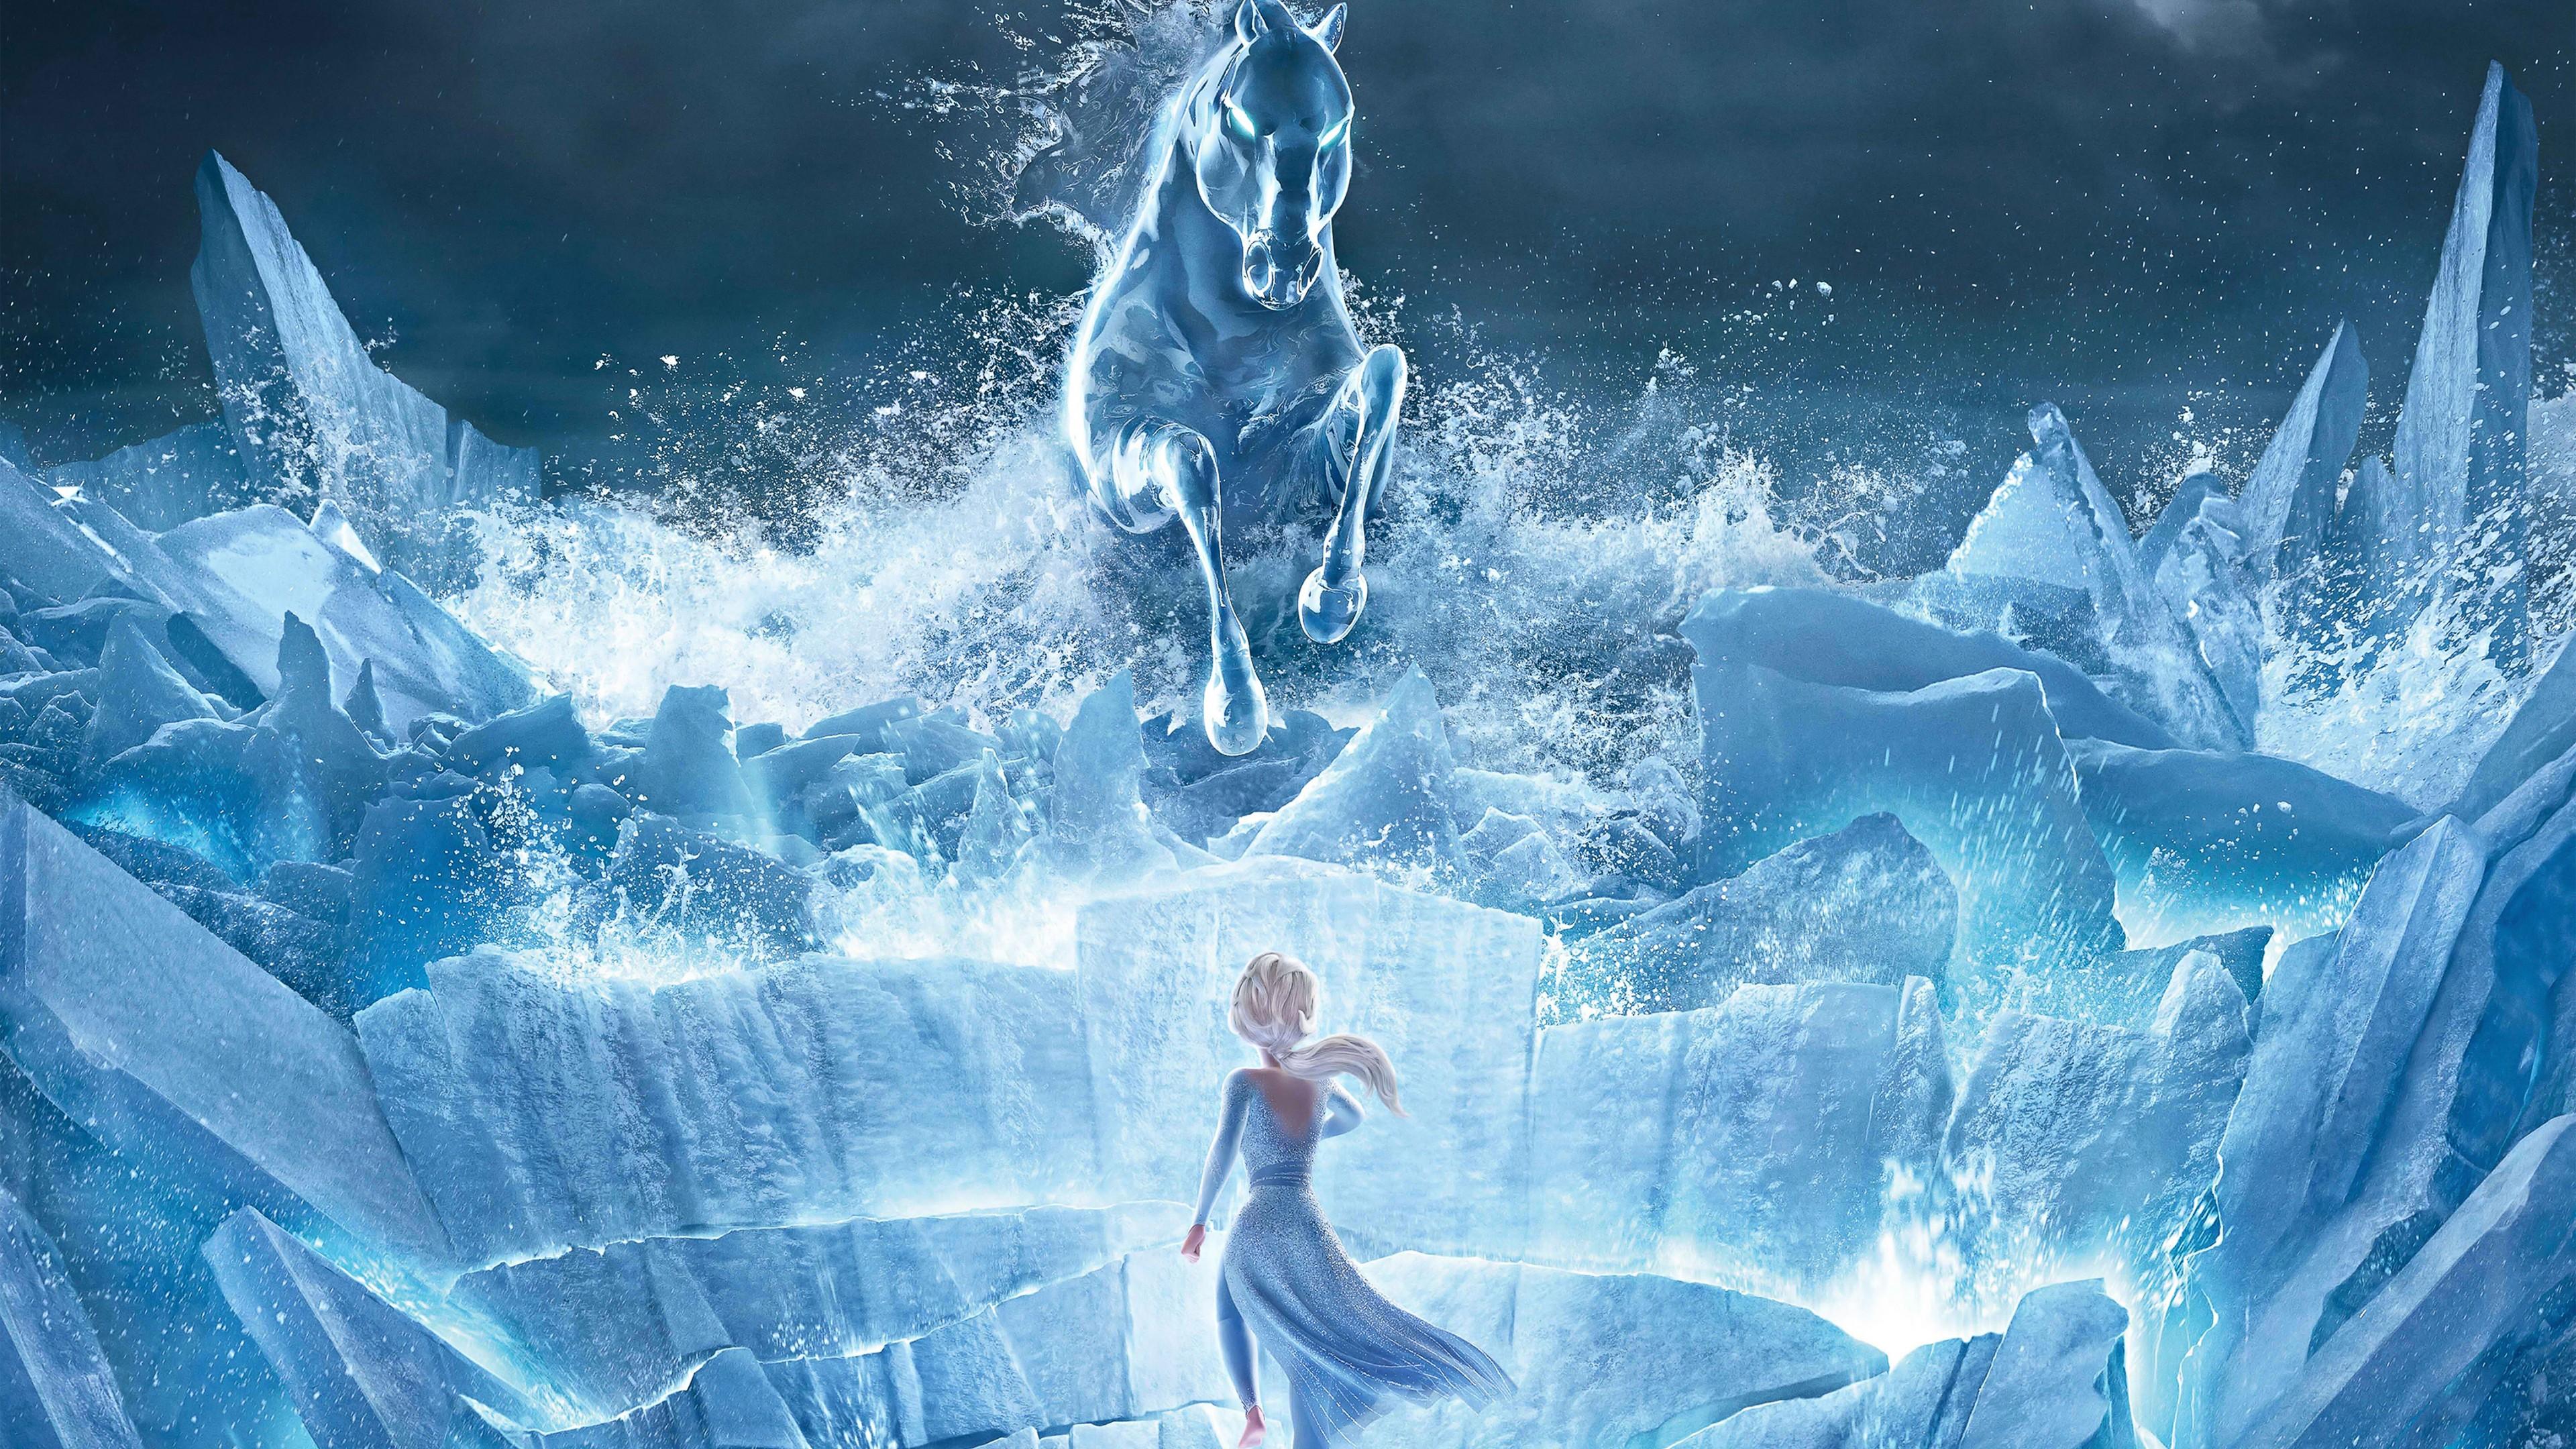 Frozen II for mac download free